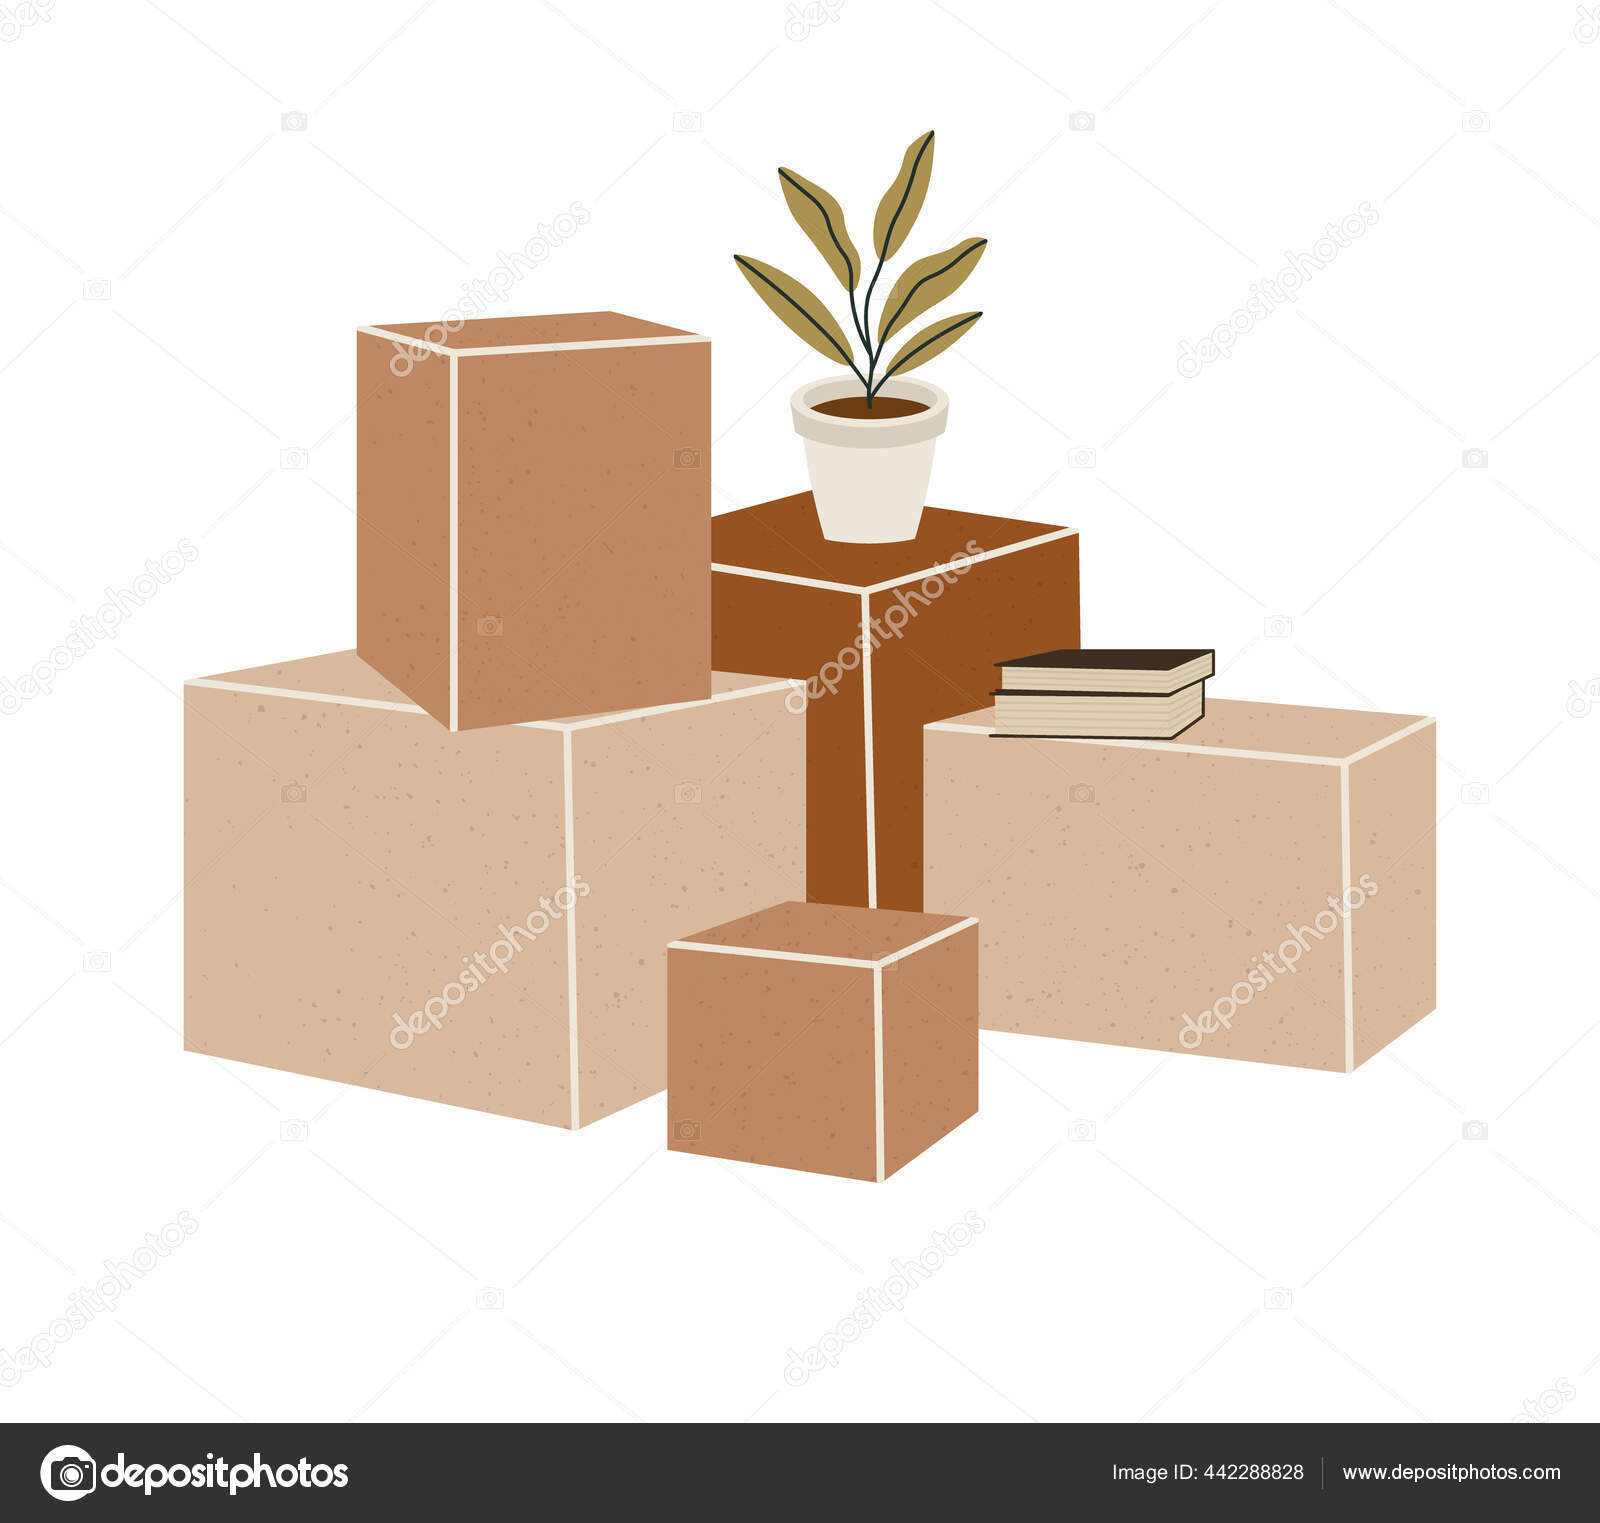 https://st2.depositphotos.com/39742510/44228/v/1600/depositphotos_442288828-stock-illustration-vector-illustration-cardboard-boxes-flower.jpg